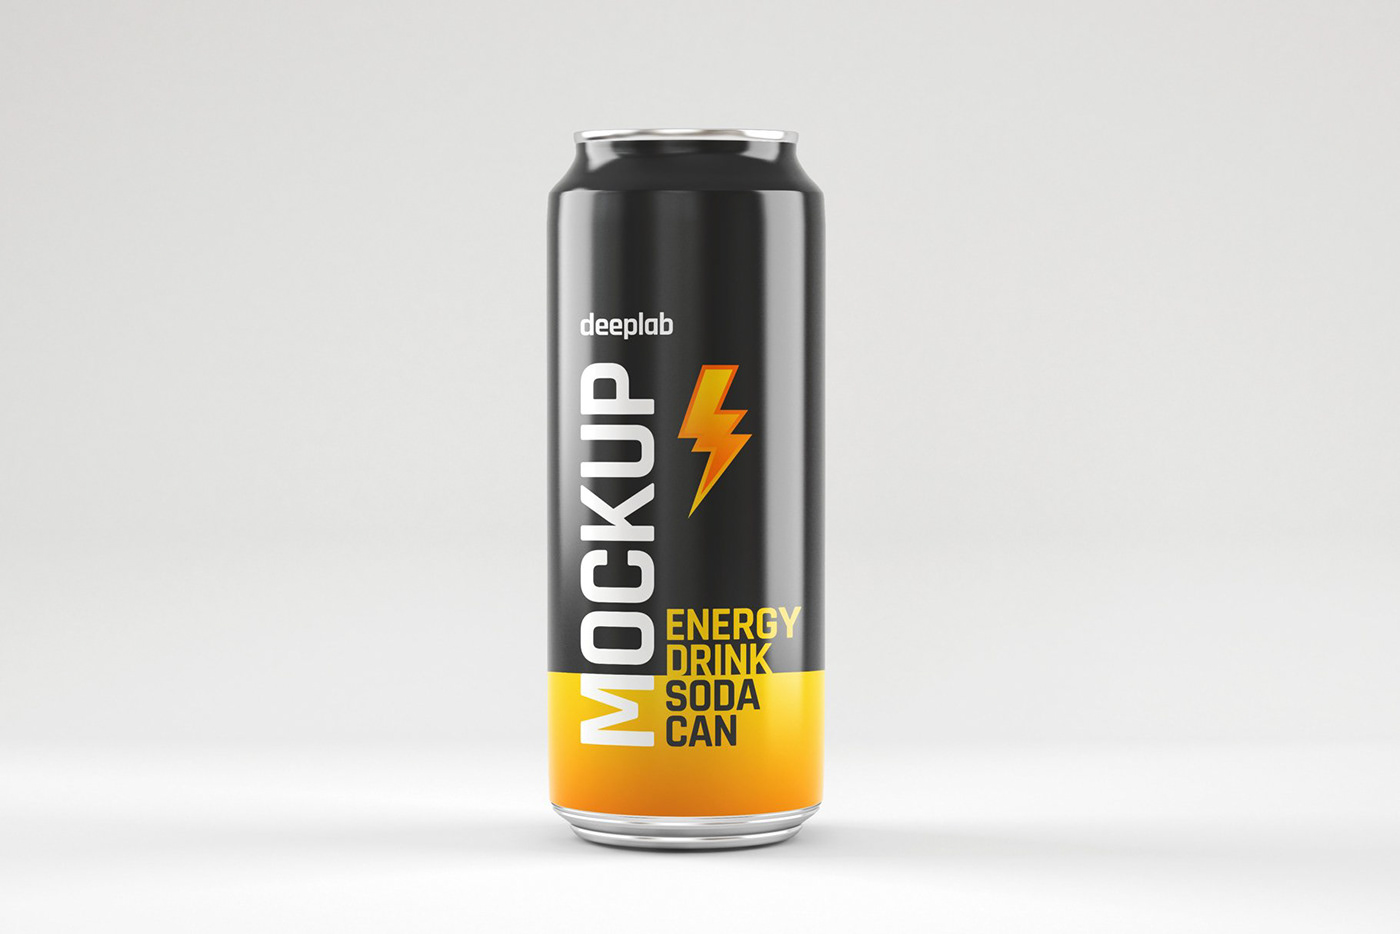 can sodacan Mockup energy drink metal bottle thunder bolt creative